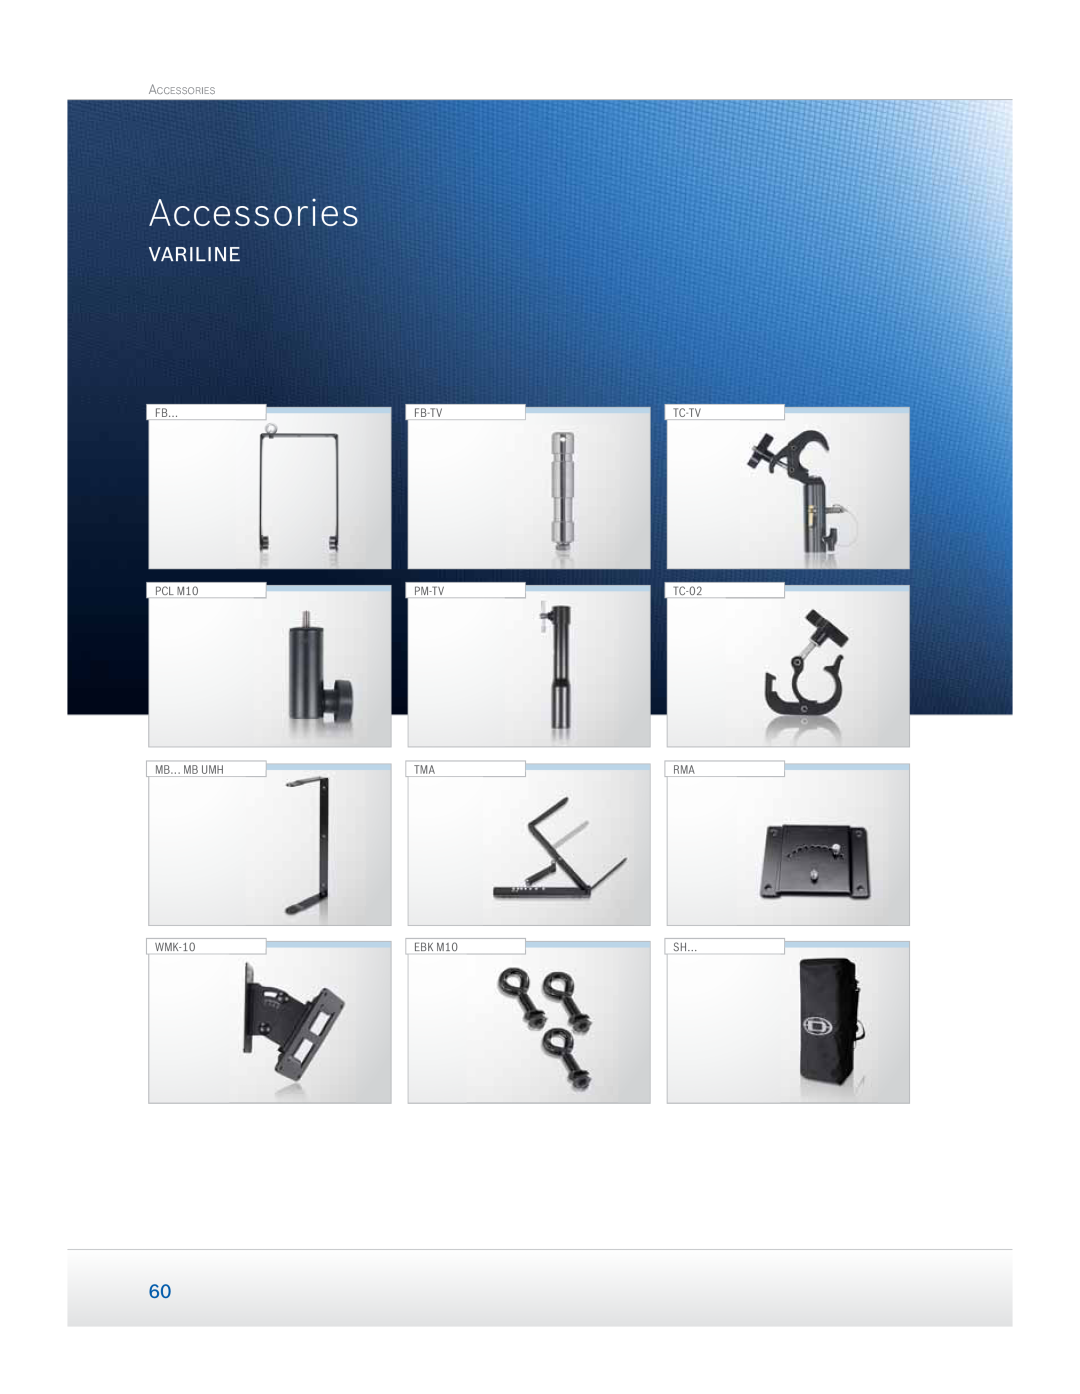 Dynacord Speaker manual Variline, Accessories, Fb-Tv, PCL M10, Pm-Tv, TC-TV TC-02, Mb Mb Umh, WMK-10, EBK M10 